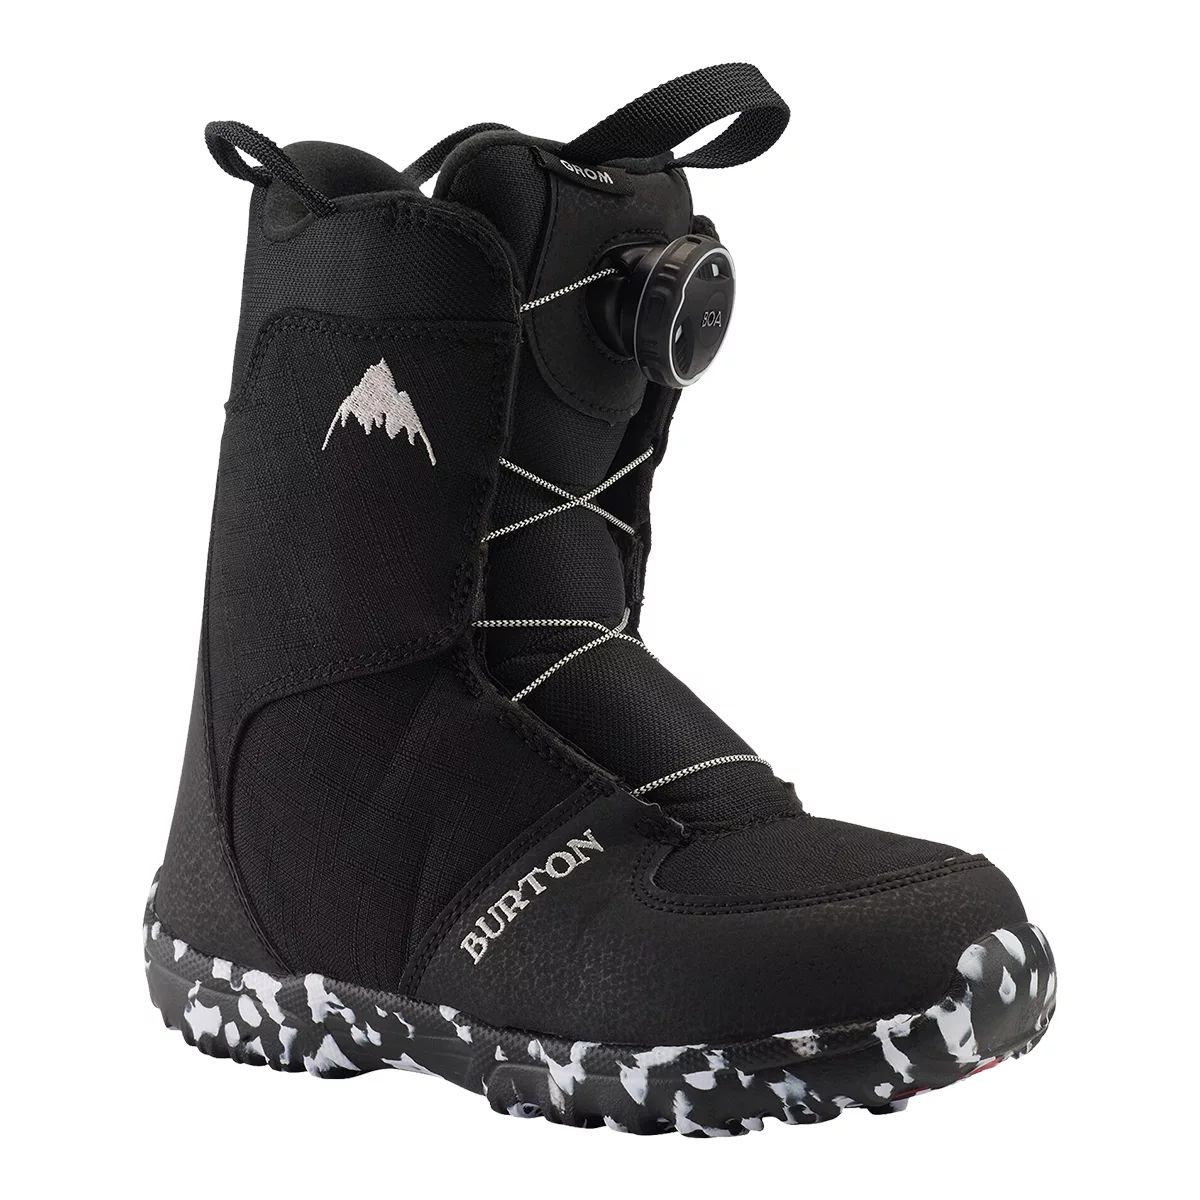 Image of Burton Grom Boa Junior Snowboard Boots 2019/20 - Black